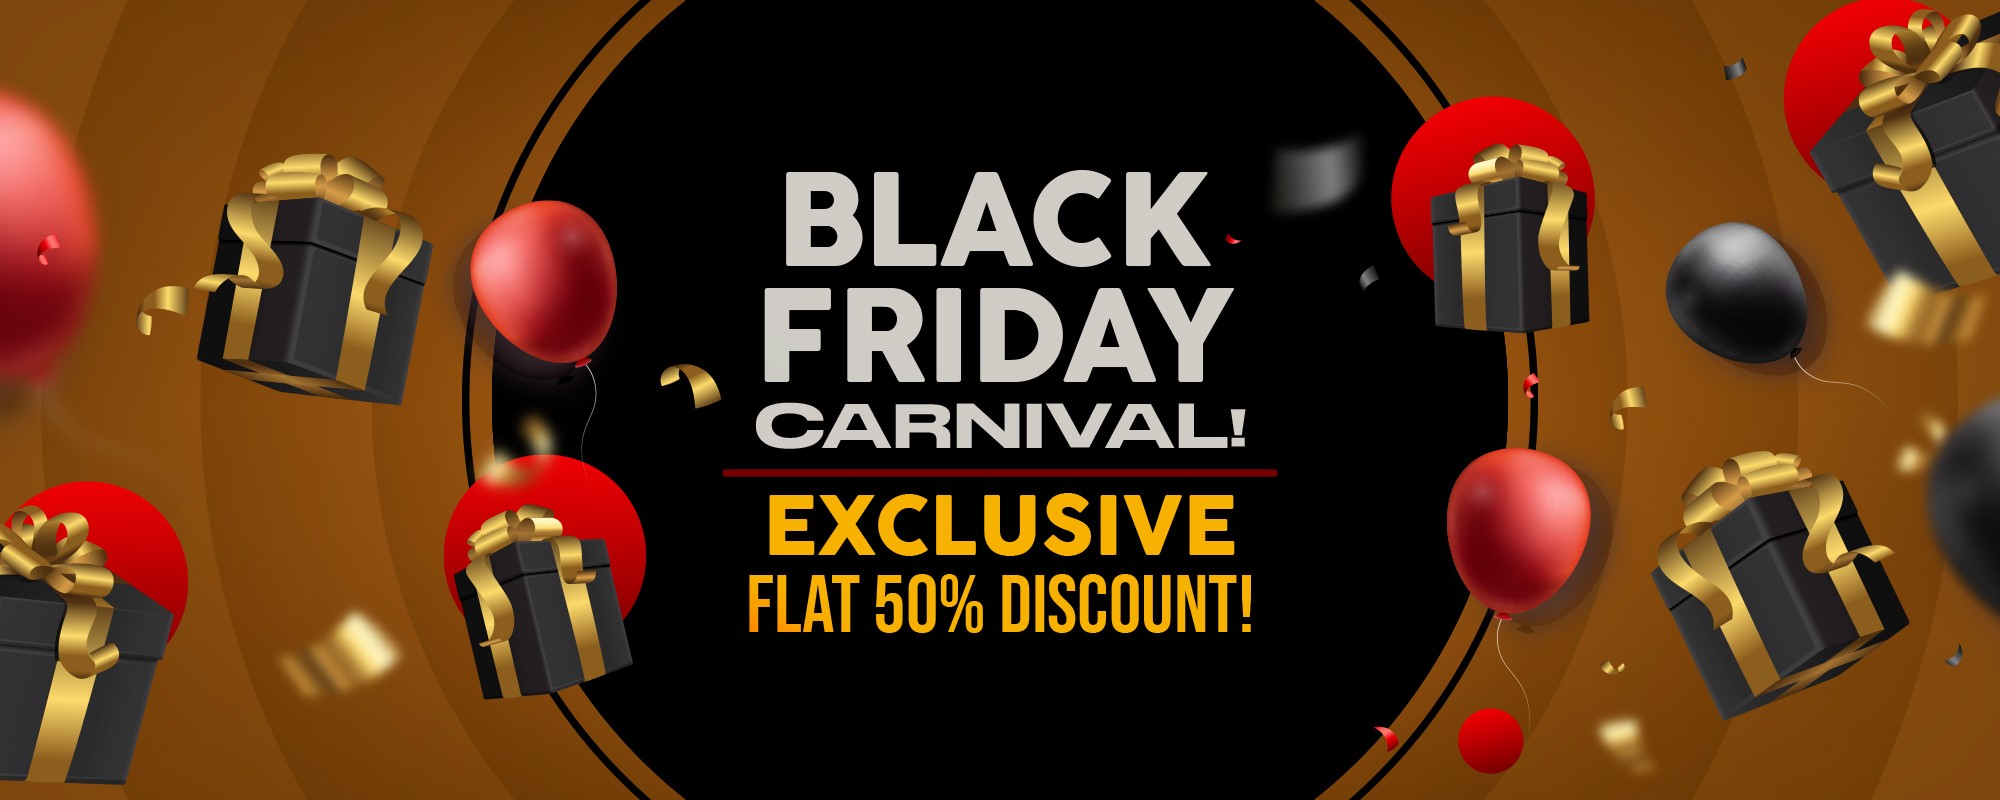 Black Friday Offer- NFT Marketplace Discount